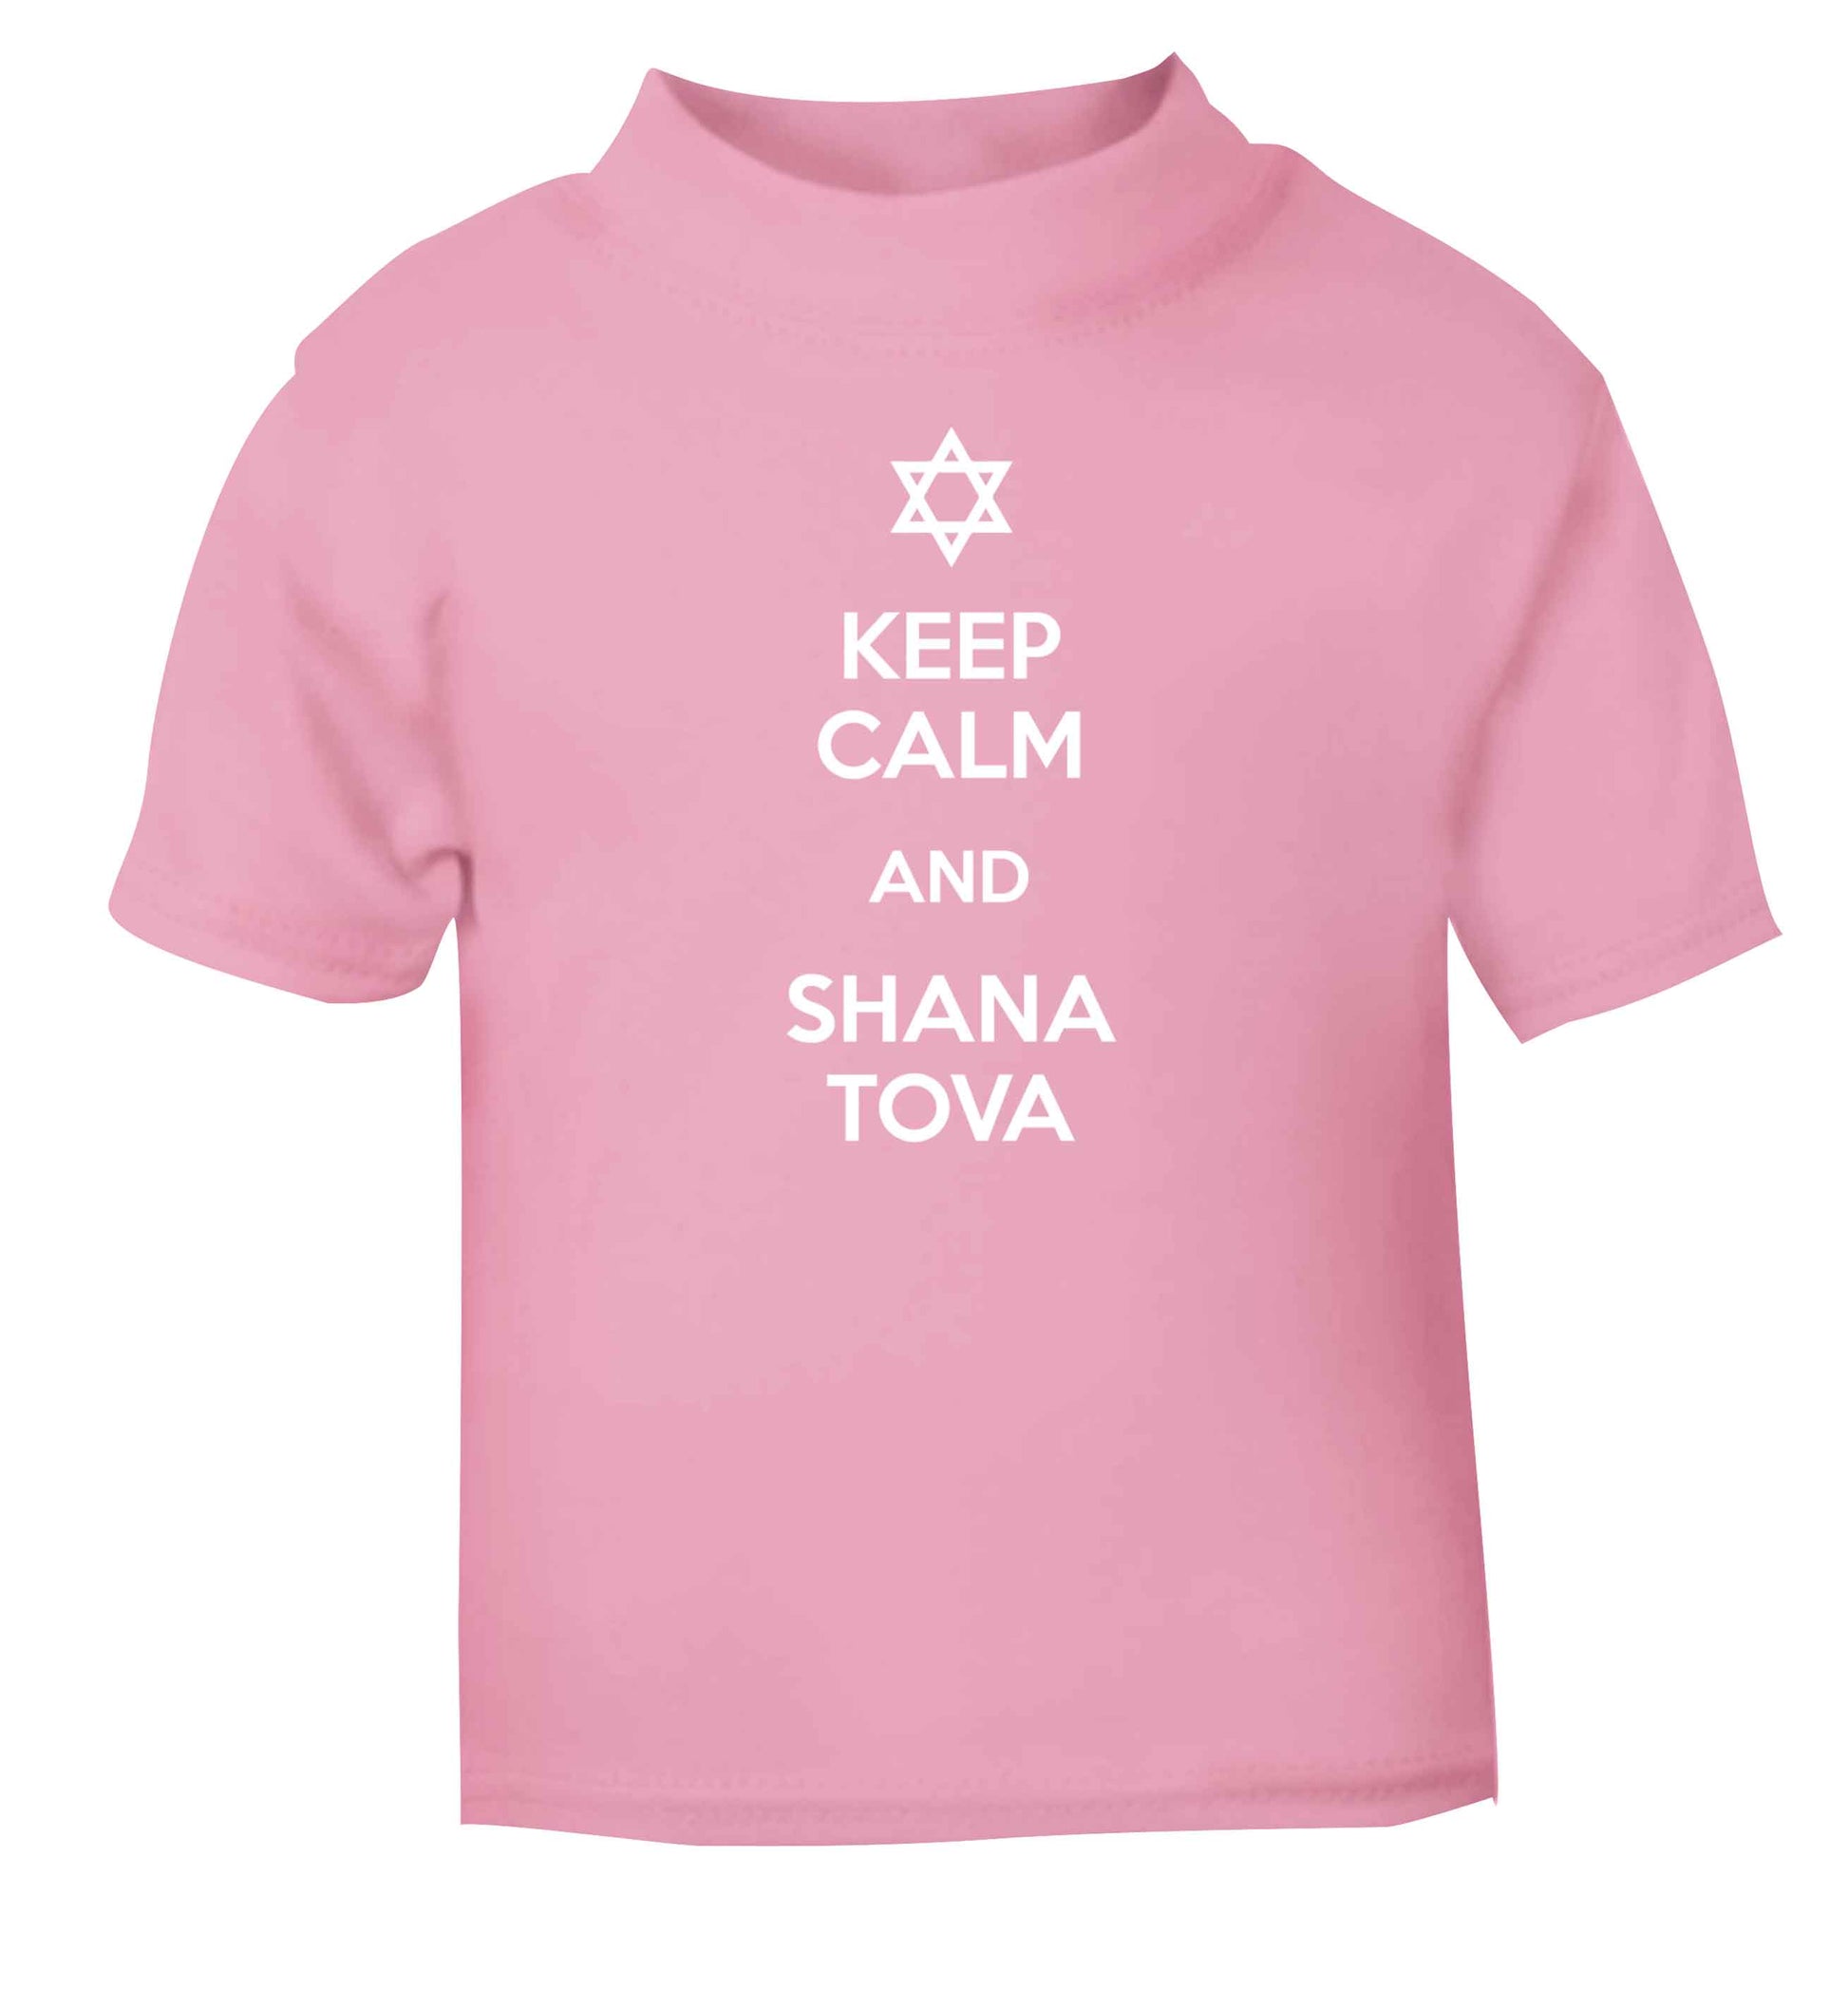 Keep calm and shana tova light pink Baby Toddler Tshirt 2 Years